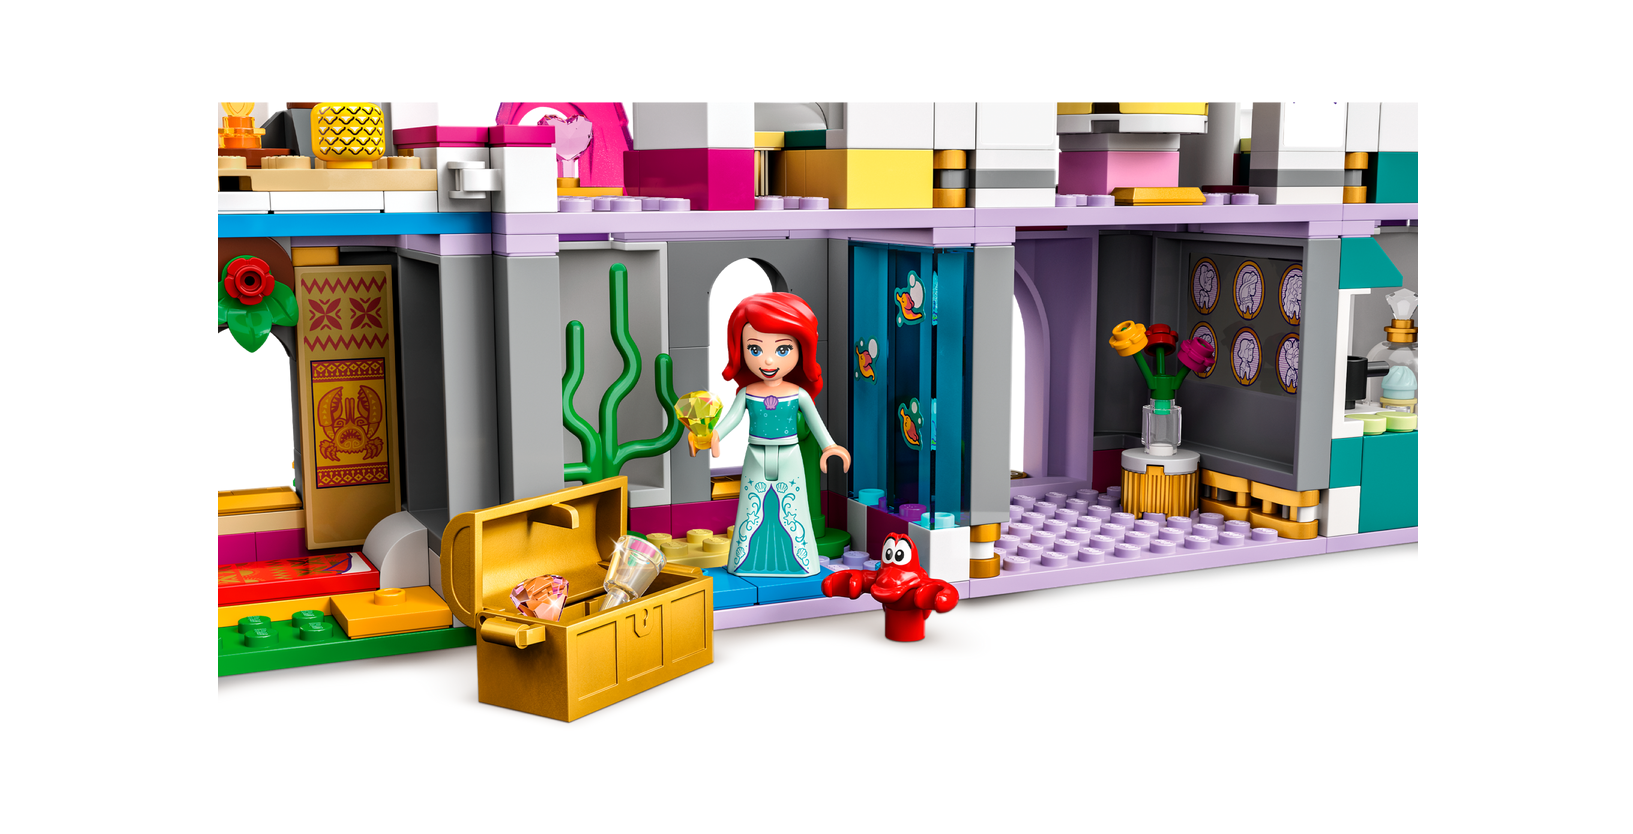 Lego Lego 43205 Disney - Le Château de l’aventure ultime